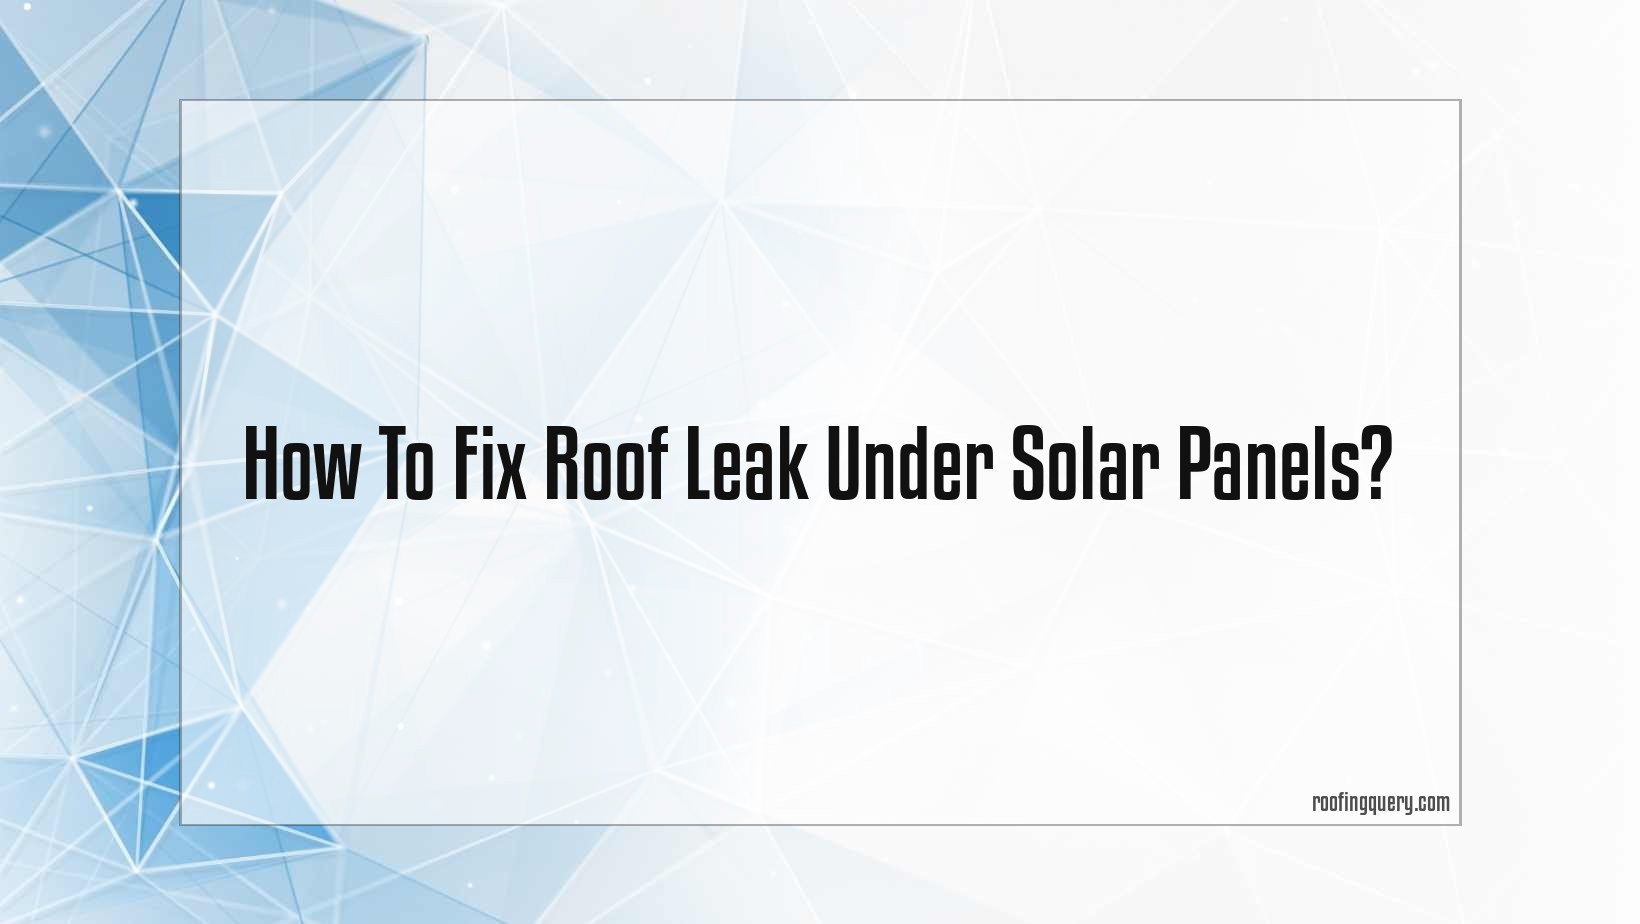 How To Fix Roof Leak Under Solar Panels?